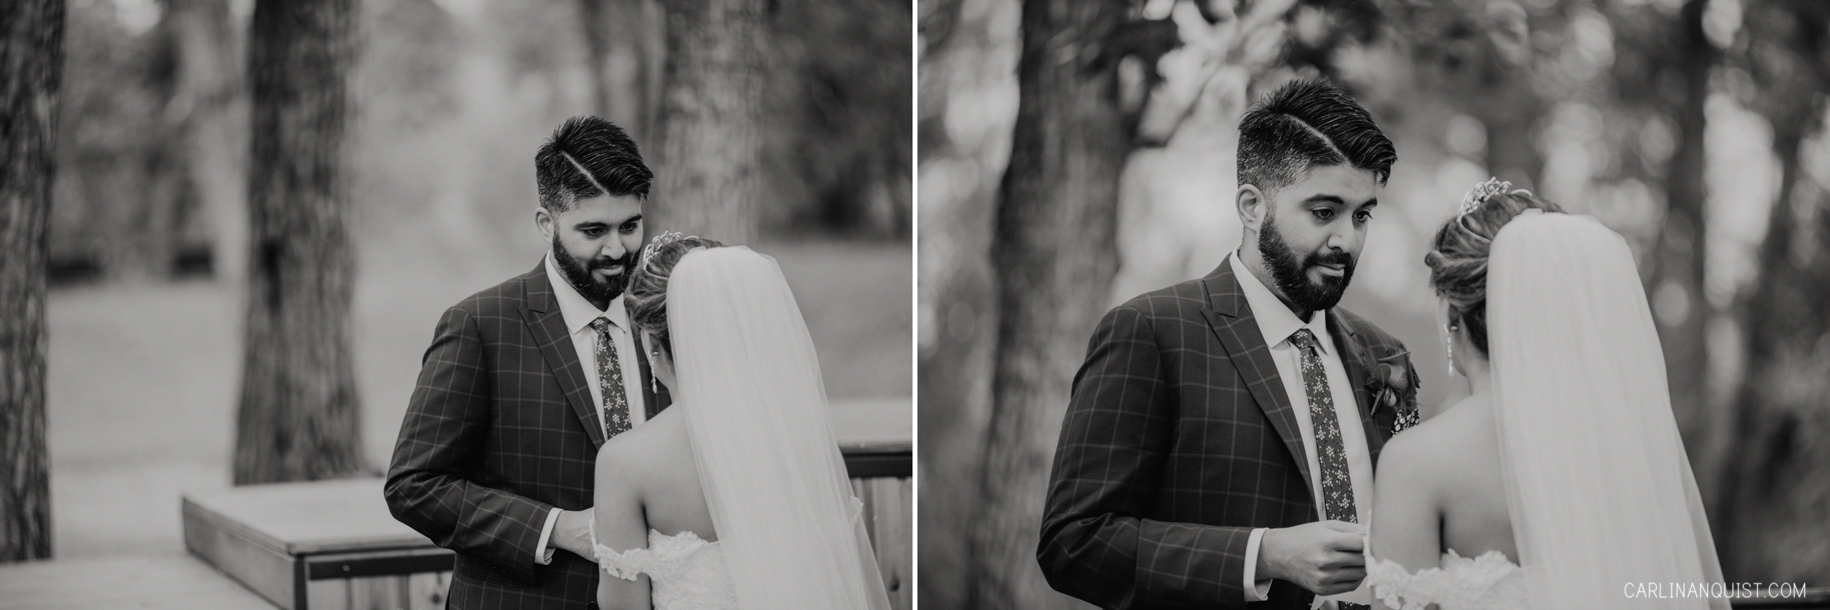 Exchanging vows - Bride & Groom Portraits - Catholic/Sikh Wedding Photographer Calgary